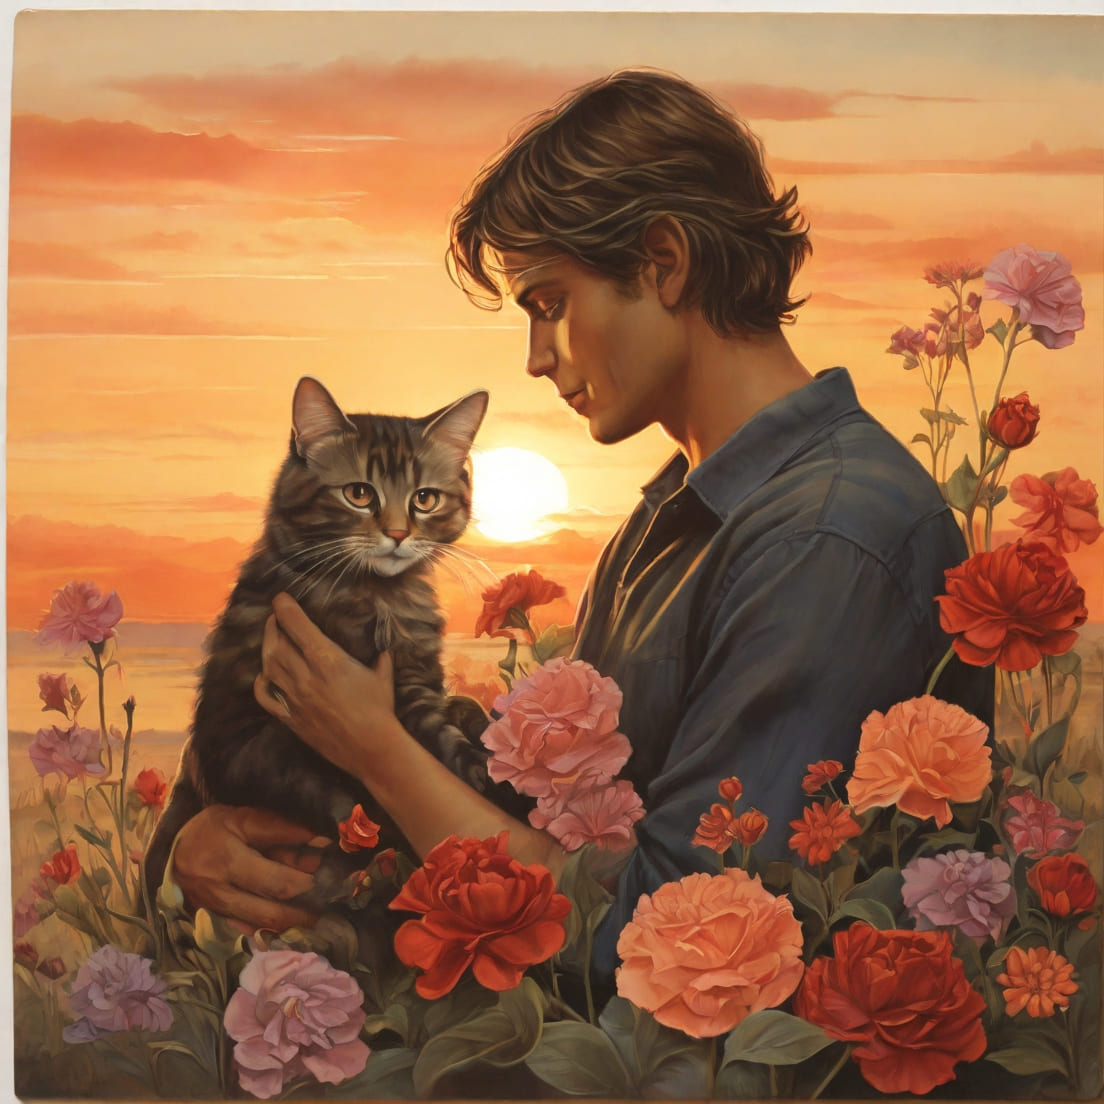 postcard sunset man woman cat flowers 1 1 883